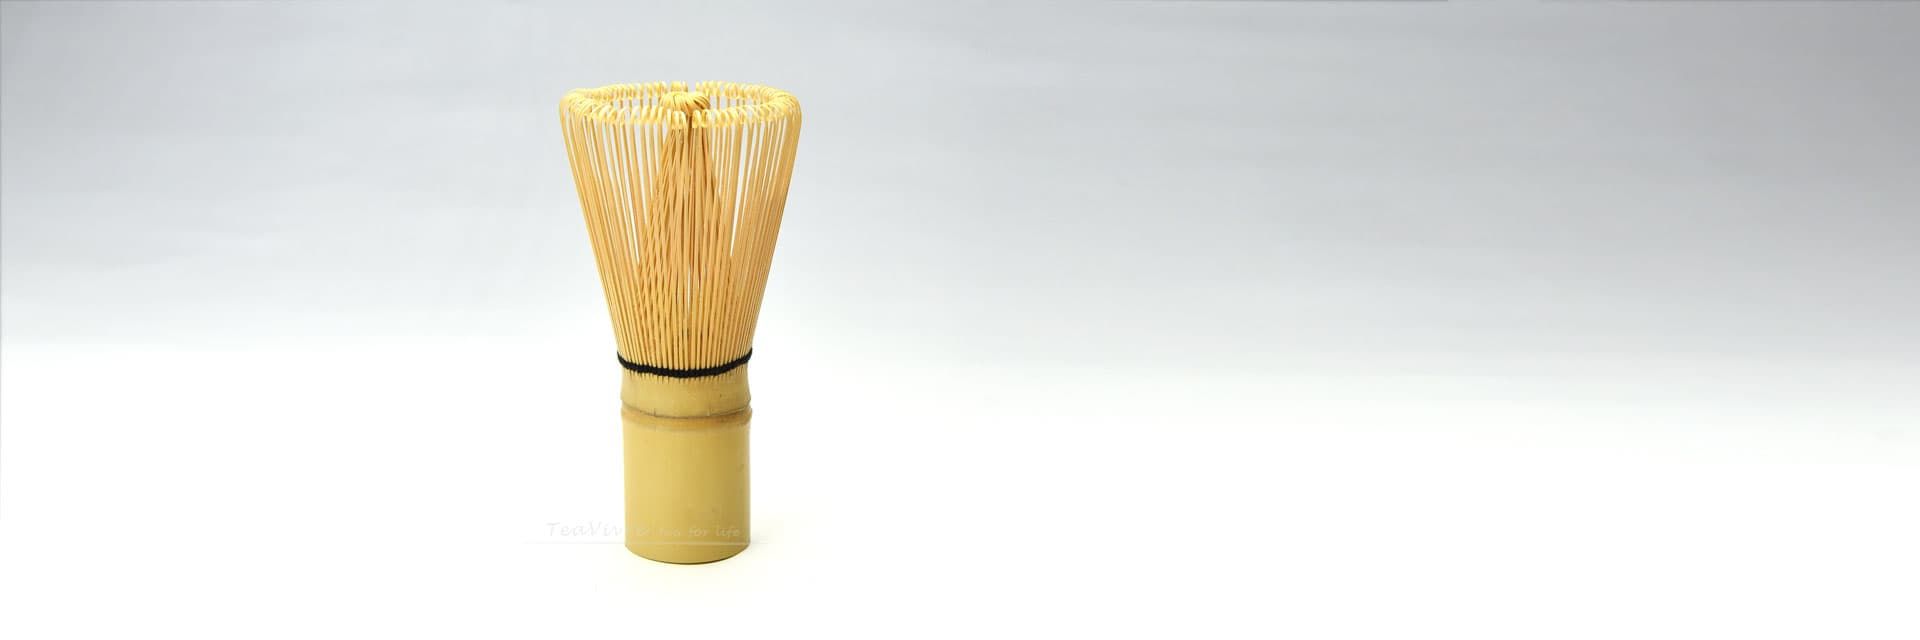 Matcha Bloom Mini Whisk | Everyday Bamboo Matcha Chasen